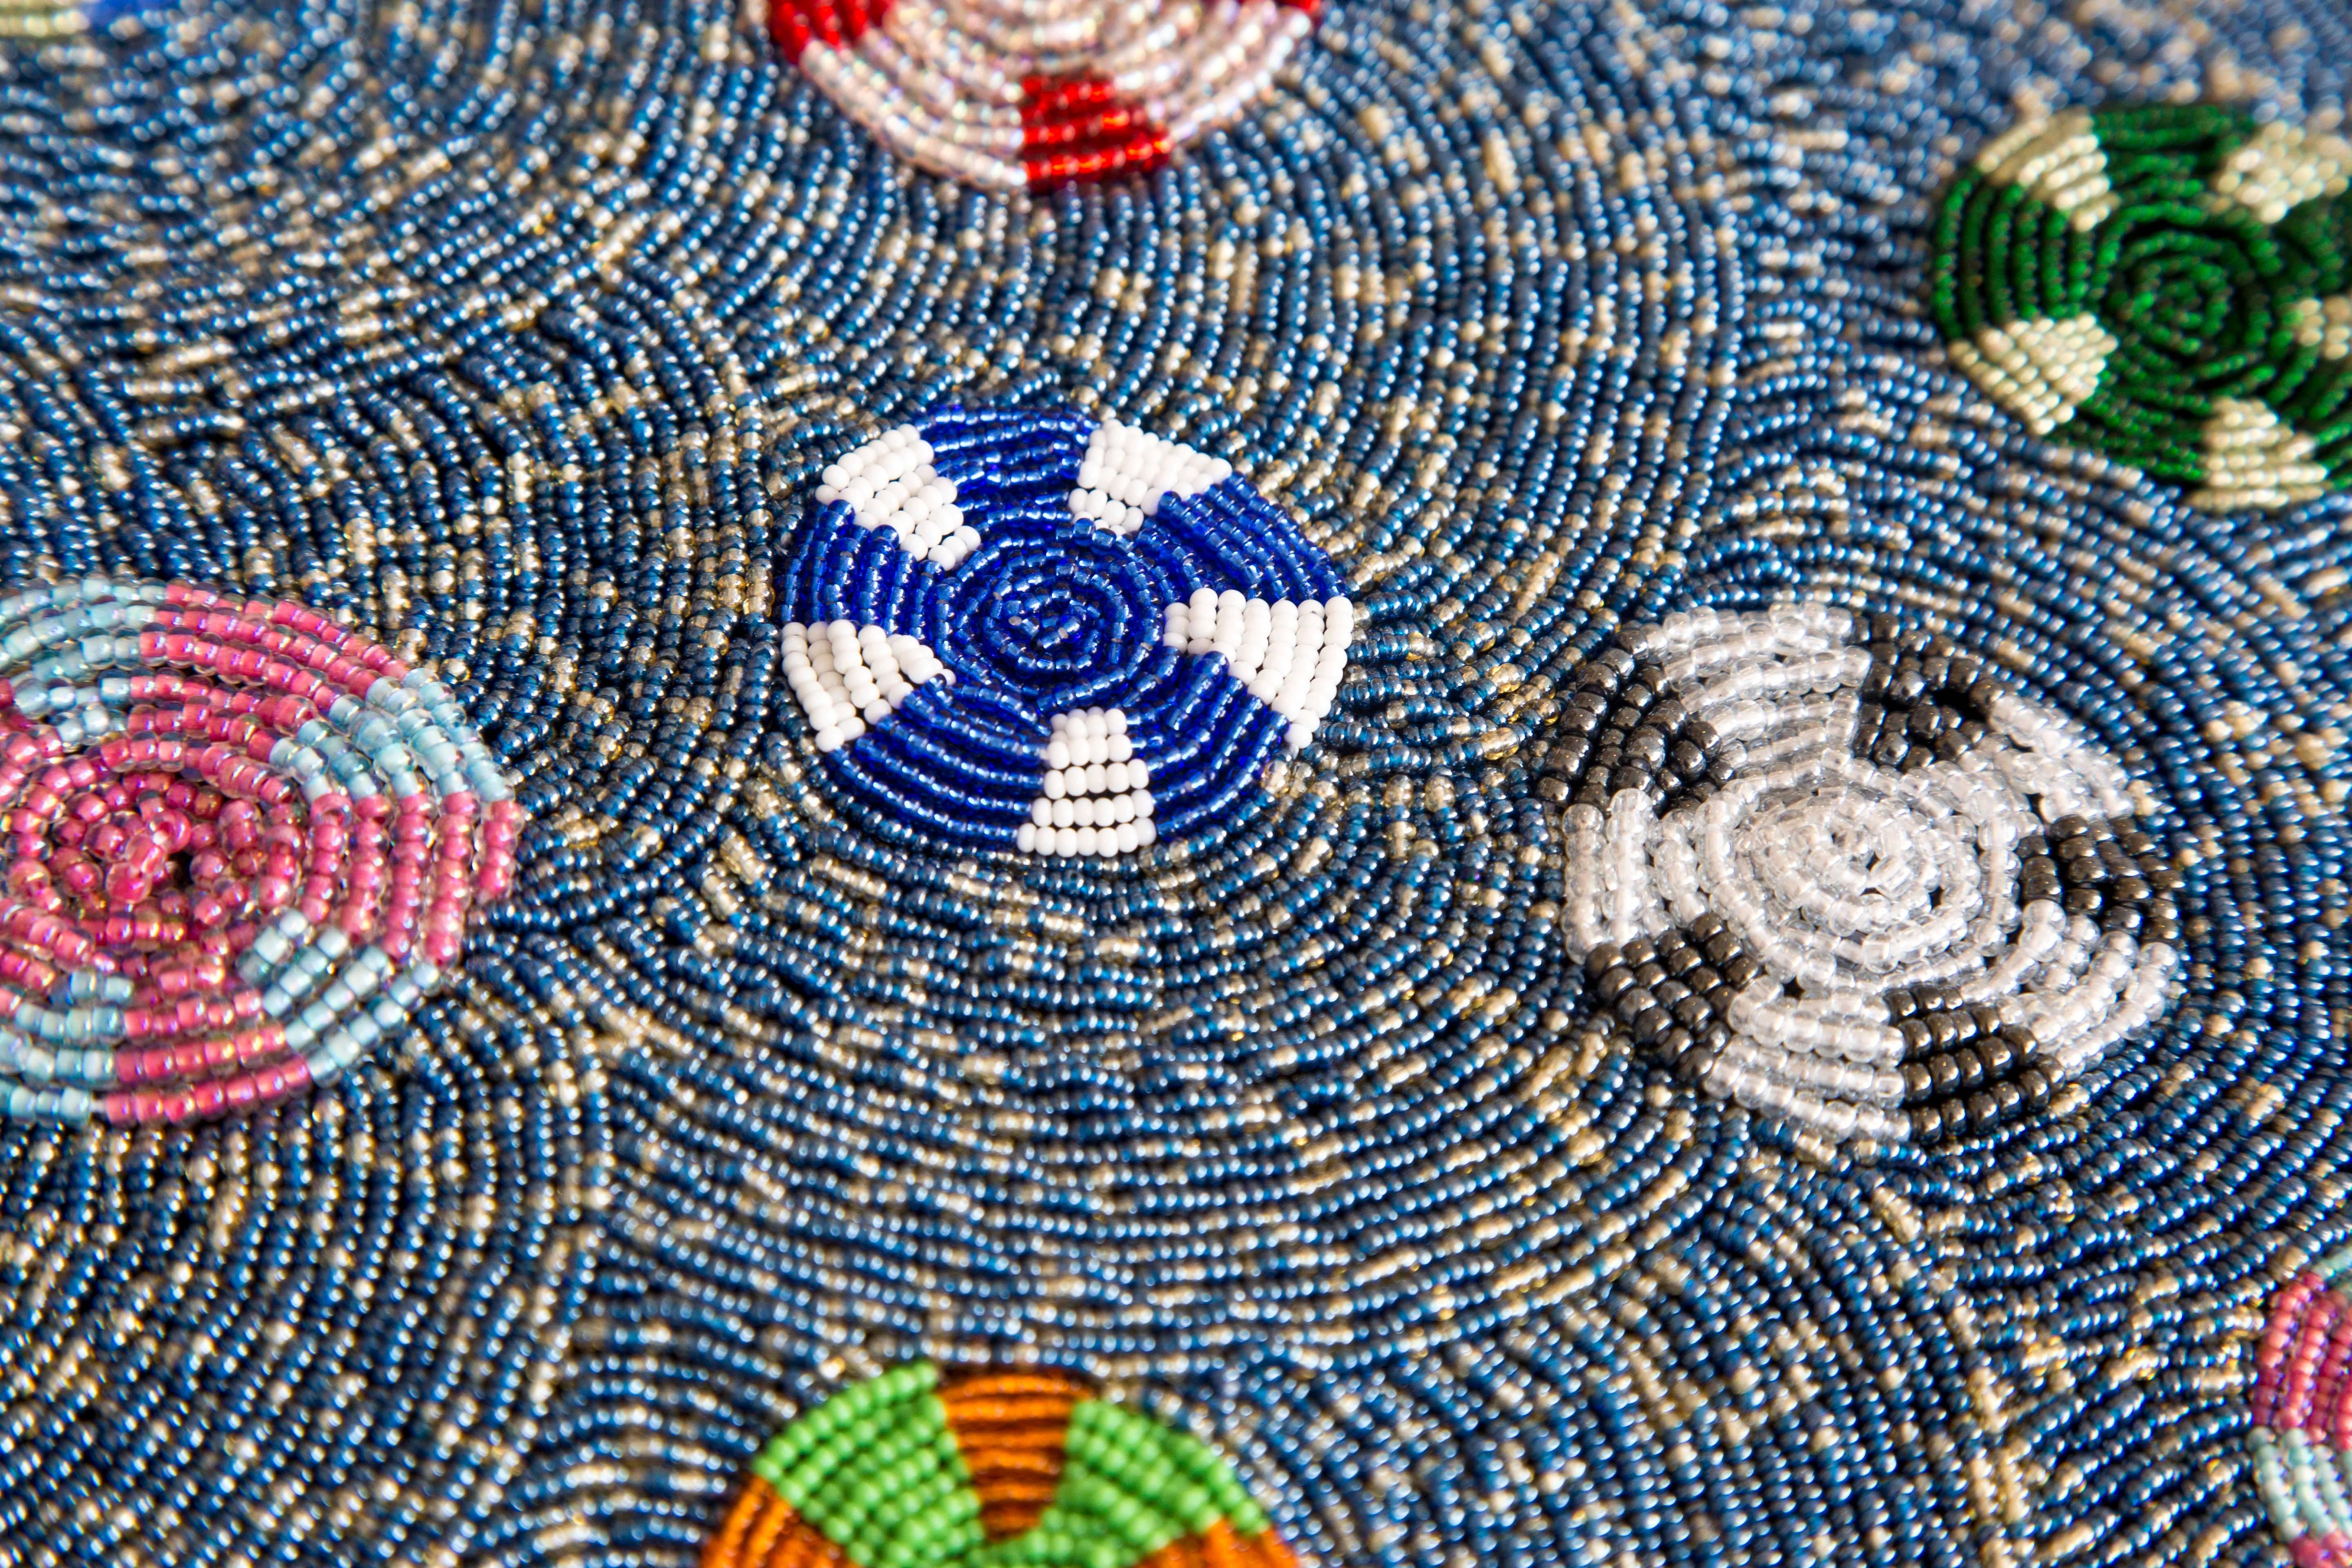 Ripples of thought by Thando Ntobela, glass beads sewn onto fabric, 2016. 

Ubuhle now centres on four artists – Ntombephi “Induna” Ntobela, Thando Ntobela, Zandile Ntobela and Zondlile Zondo – whose mastery of beading is on display: personal